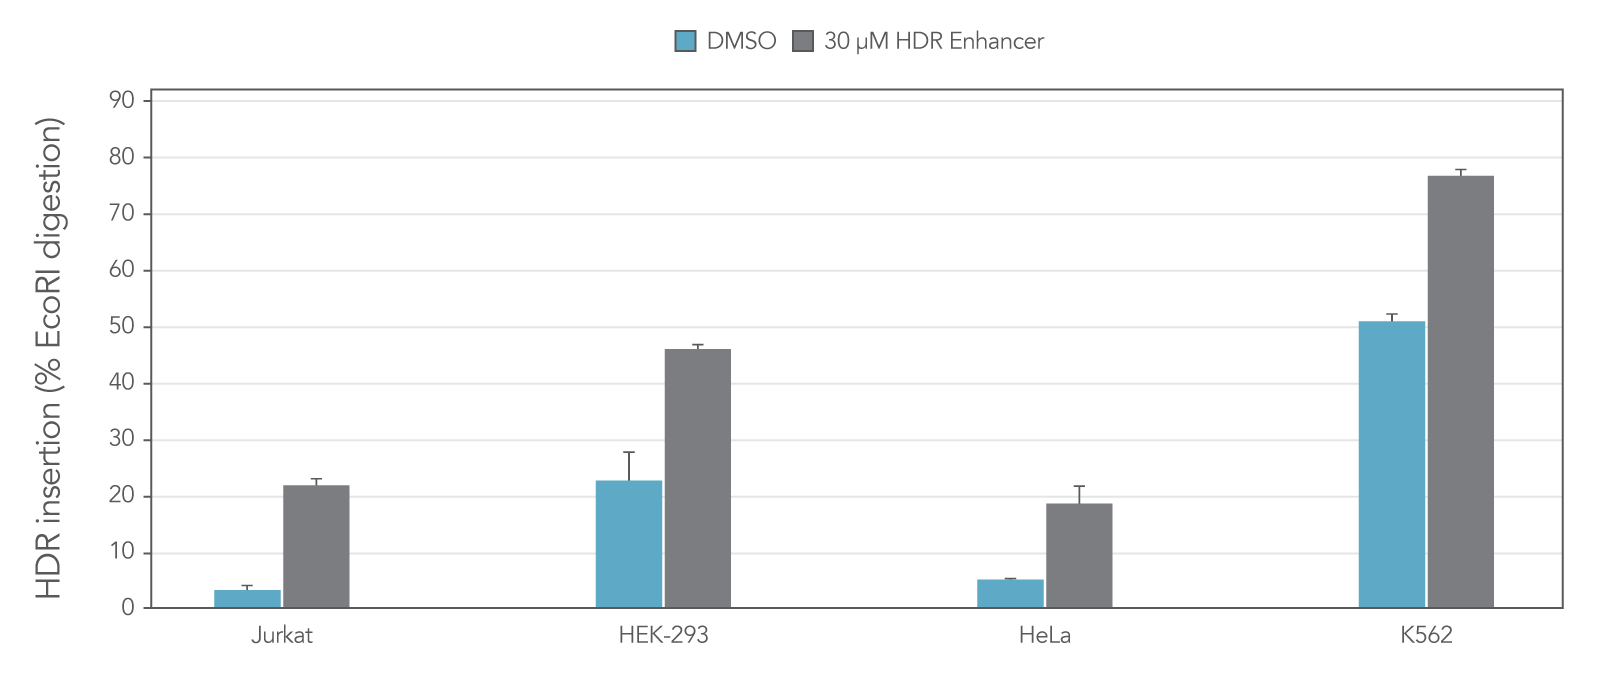 Alt-R HDR Enhancer improves HDR efficiency in commonly used human cell lines, including Jurkat, HEK-293, HeLa, and K562